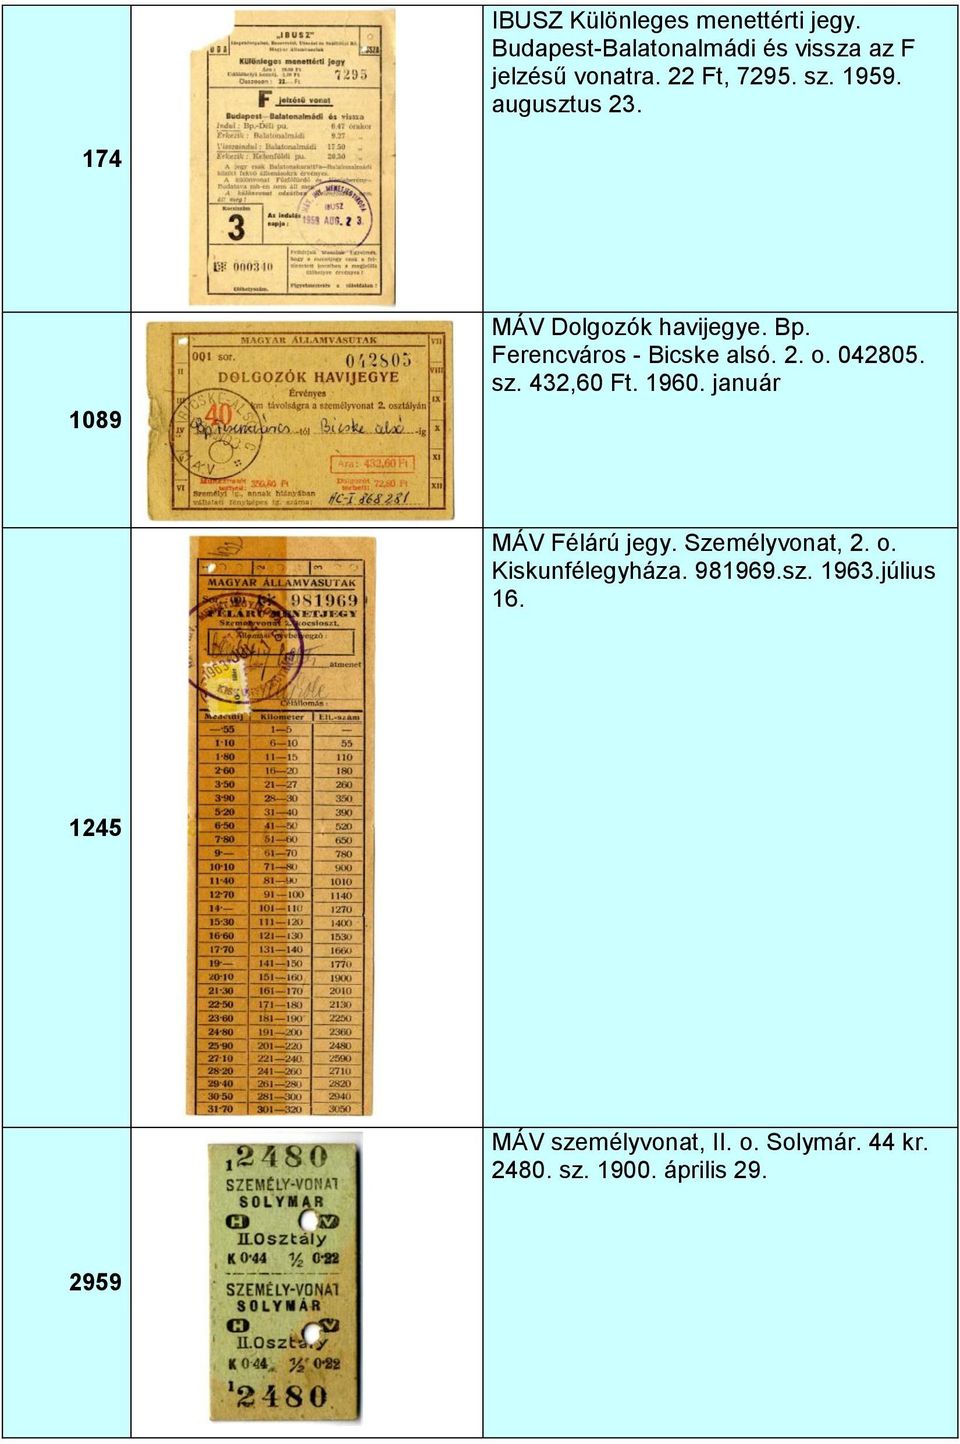 Ferencváros - Bicske alsó. 2. o. 042805. sz. 432,60 Ft. 1960. január MÁV Félárú jegy.